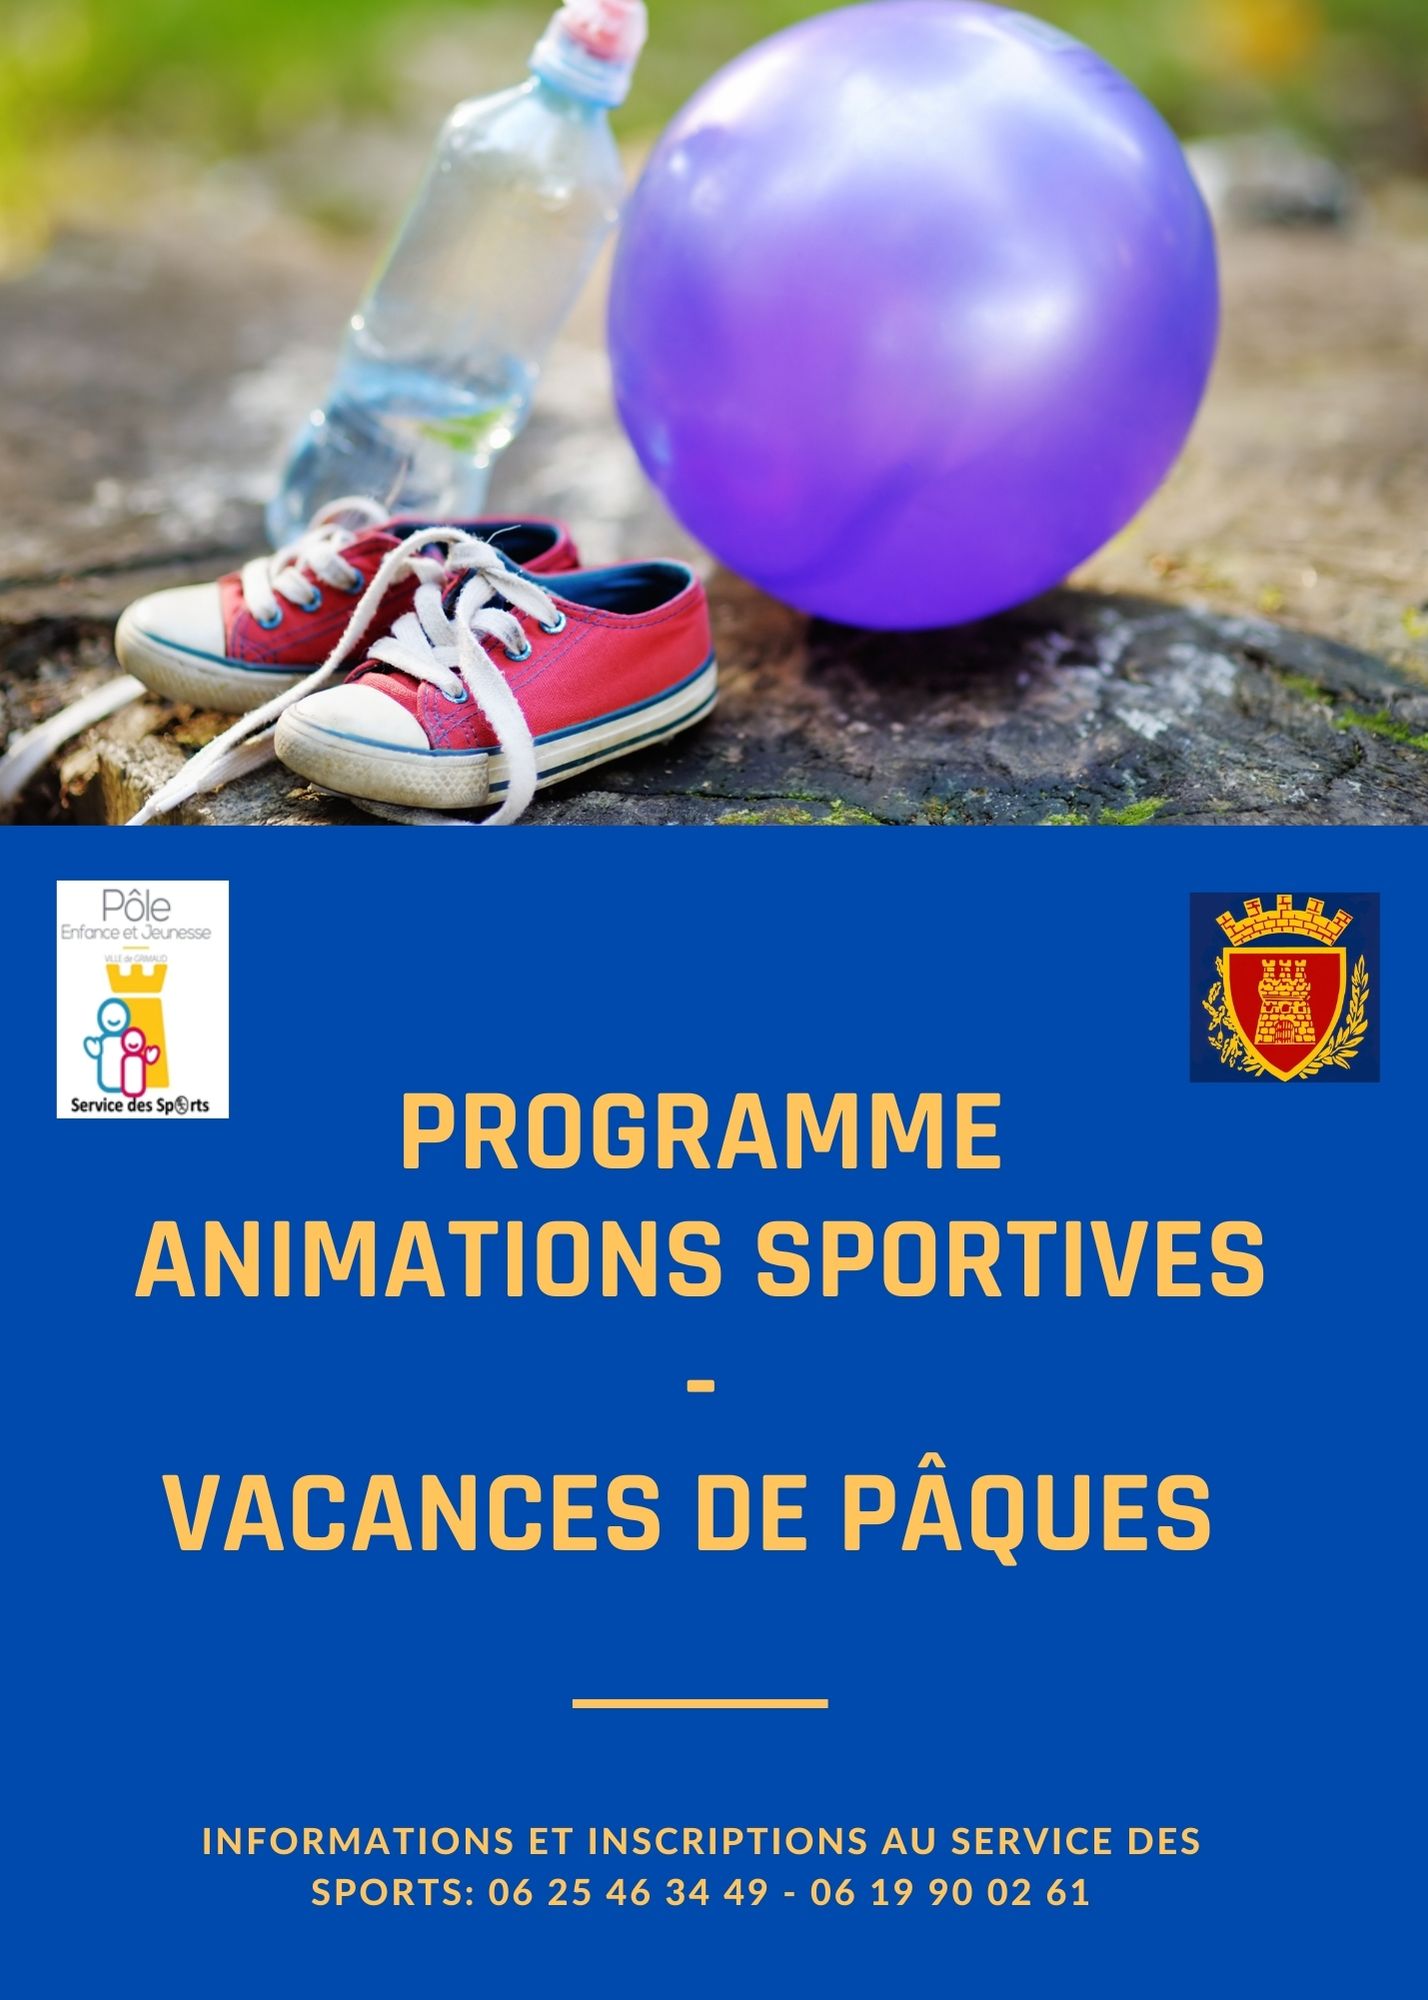 Sports activities program: Easter holidays 2022